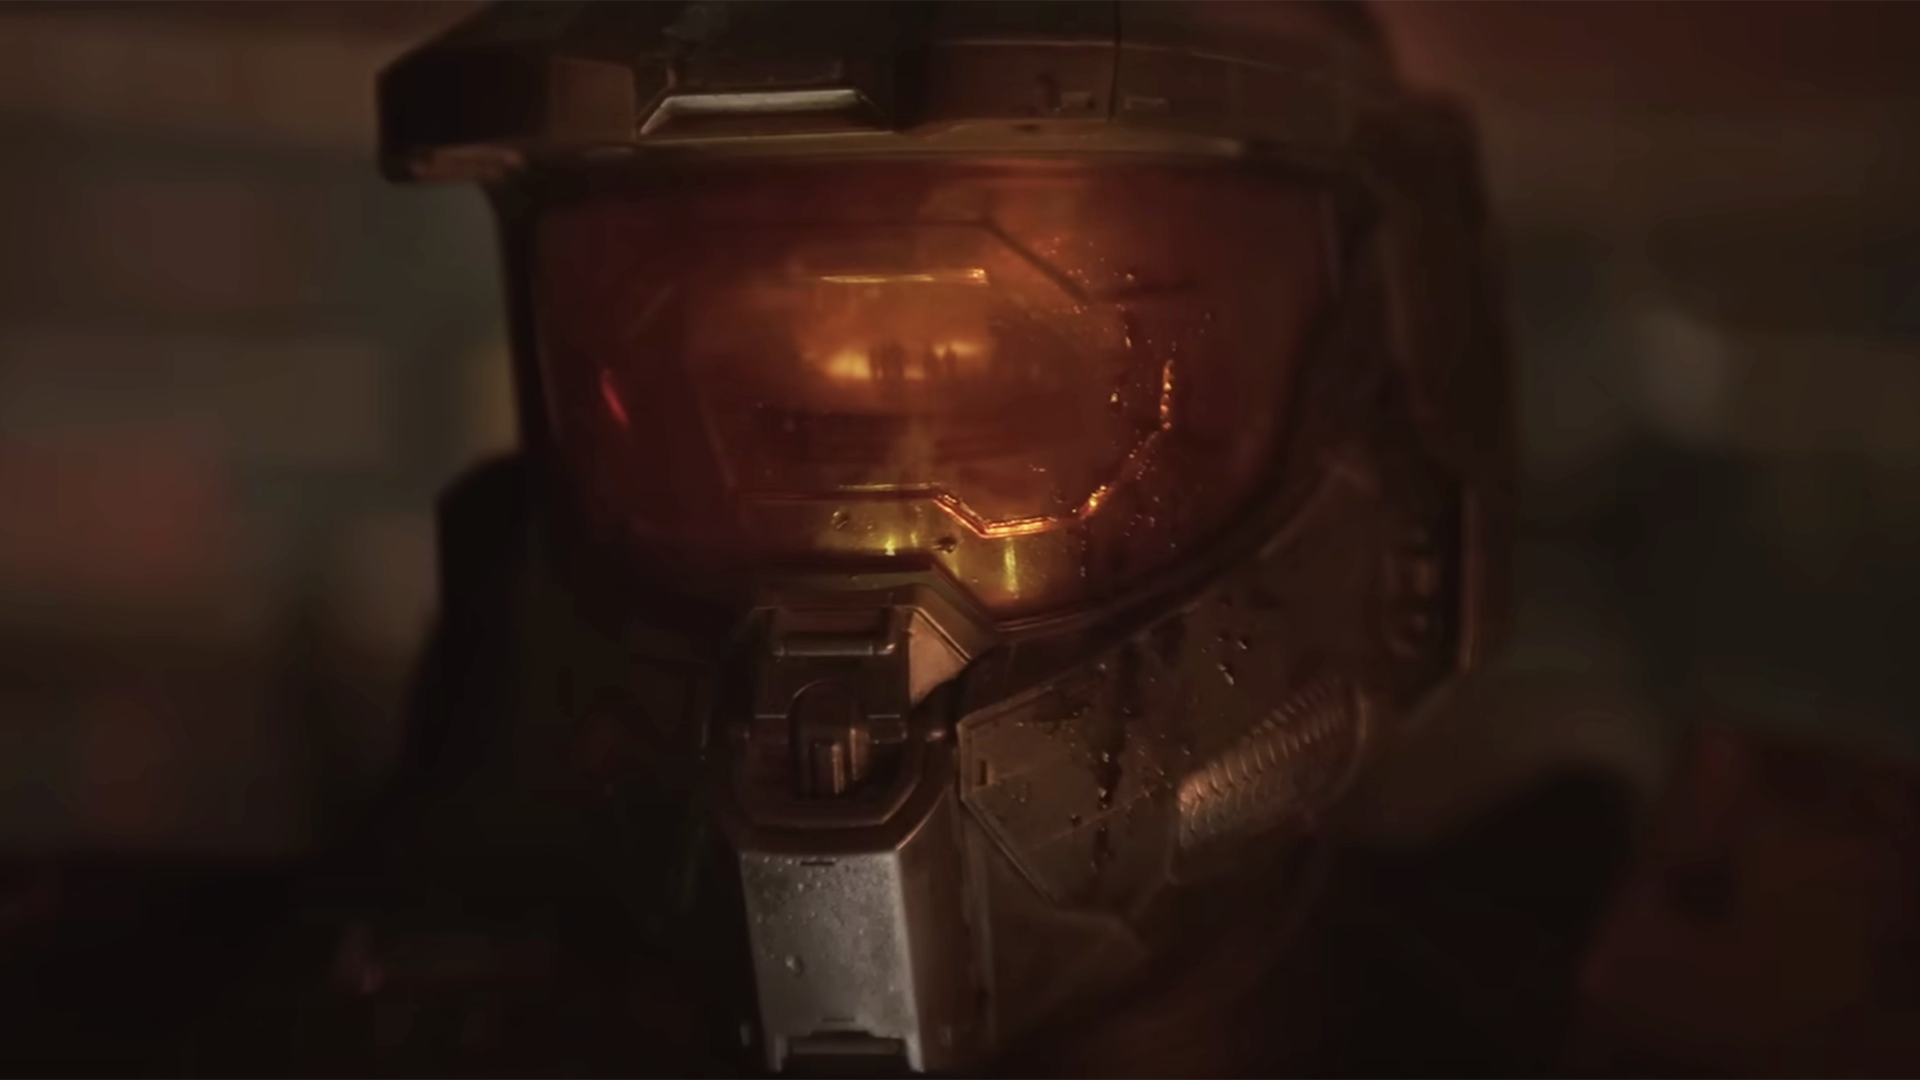 The Halo Season 2 trailer makes the first season look like a pilot